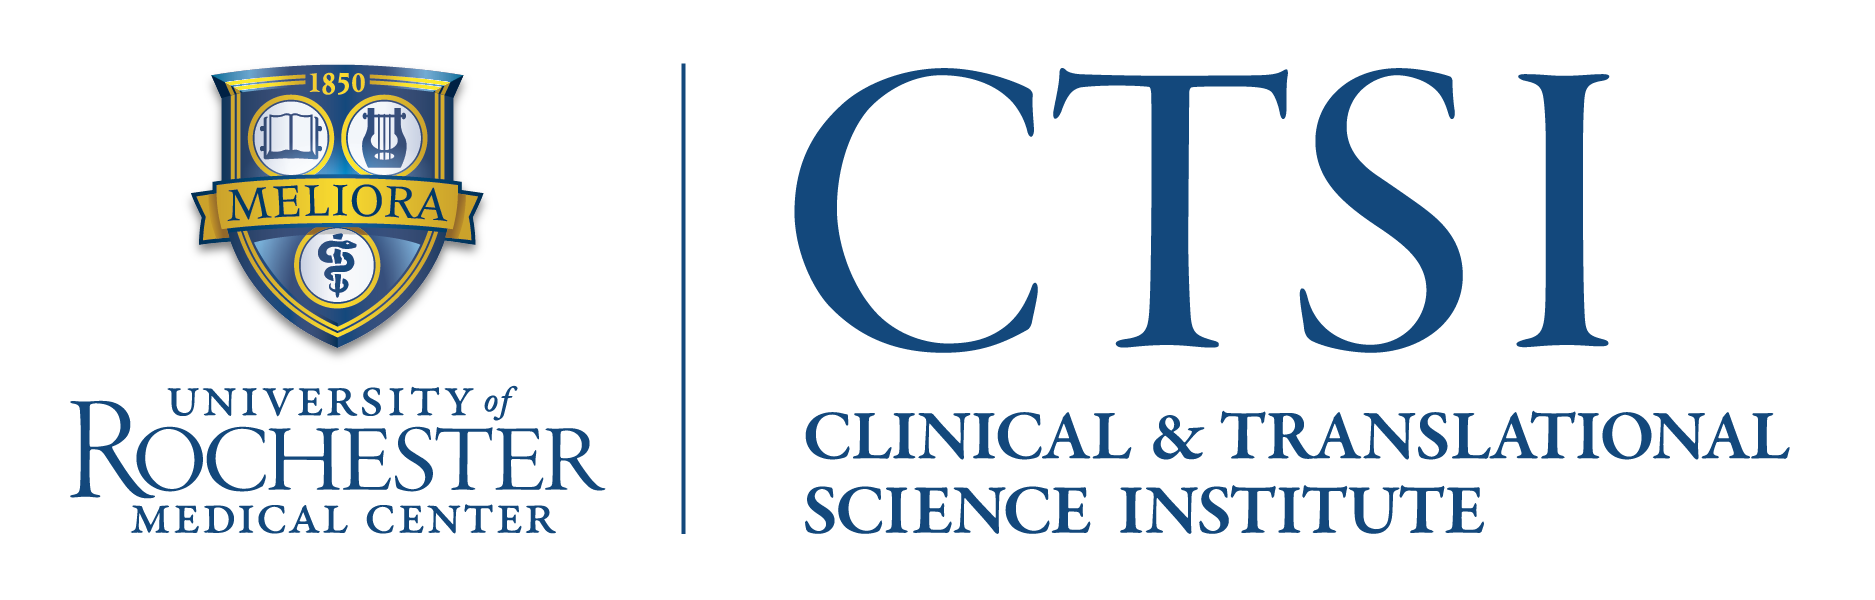 University of Rochester CTSI logo